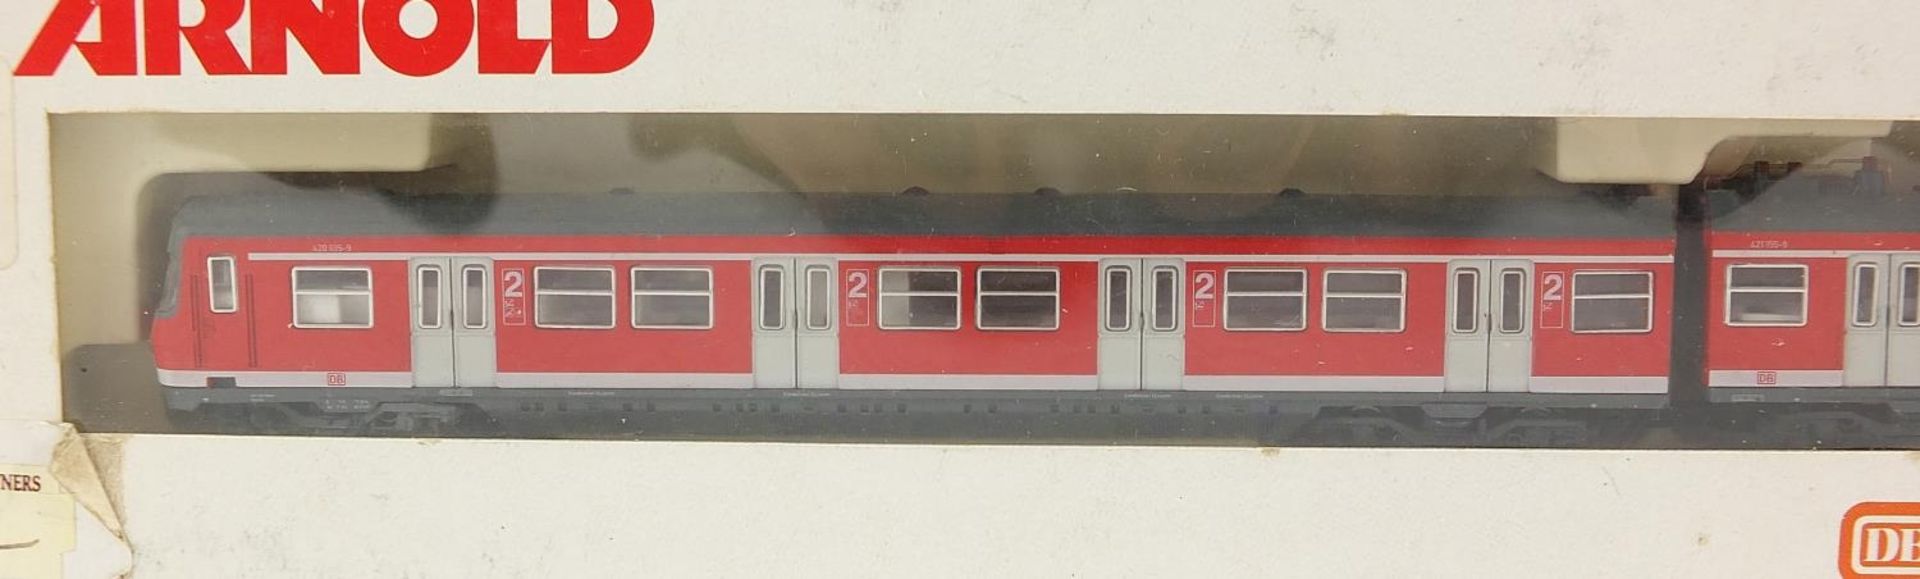 Arnold ET420 N gauge model railway three car set with box, number 2944 - Image 2 of 3